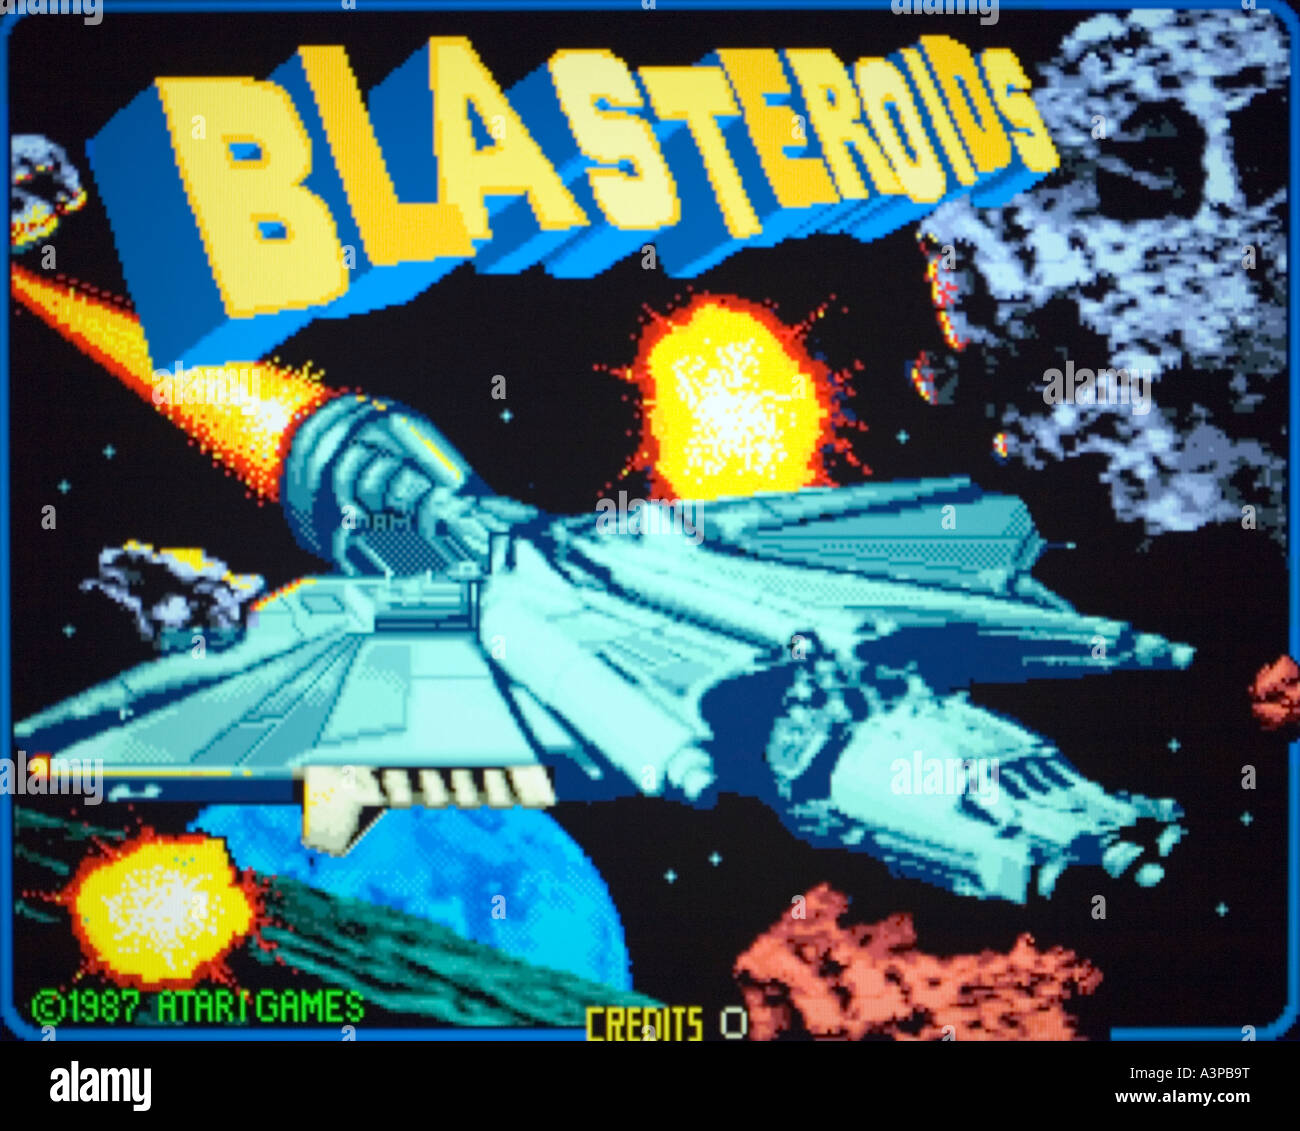 Blasteroids Atari Games 1987 vintage arcade videogame screenshot EDITORIAL USE ONLY Stock Photo